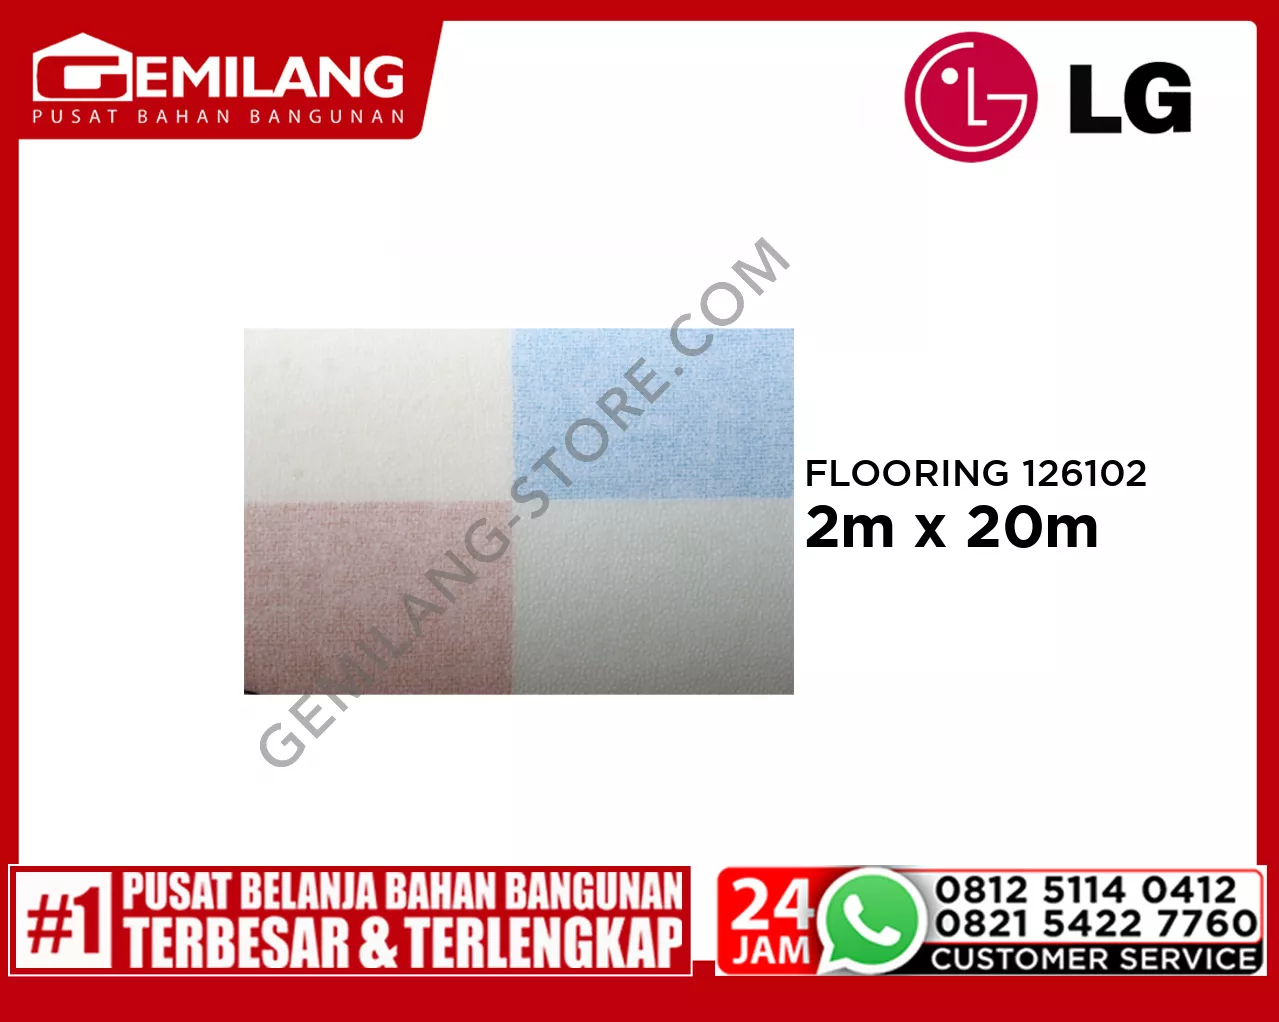 LG FLOORING 1261-02 PVC LAYER DELIGHT 2m x 20m/mtr